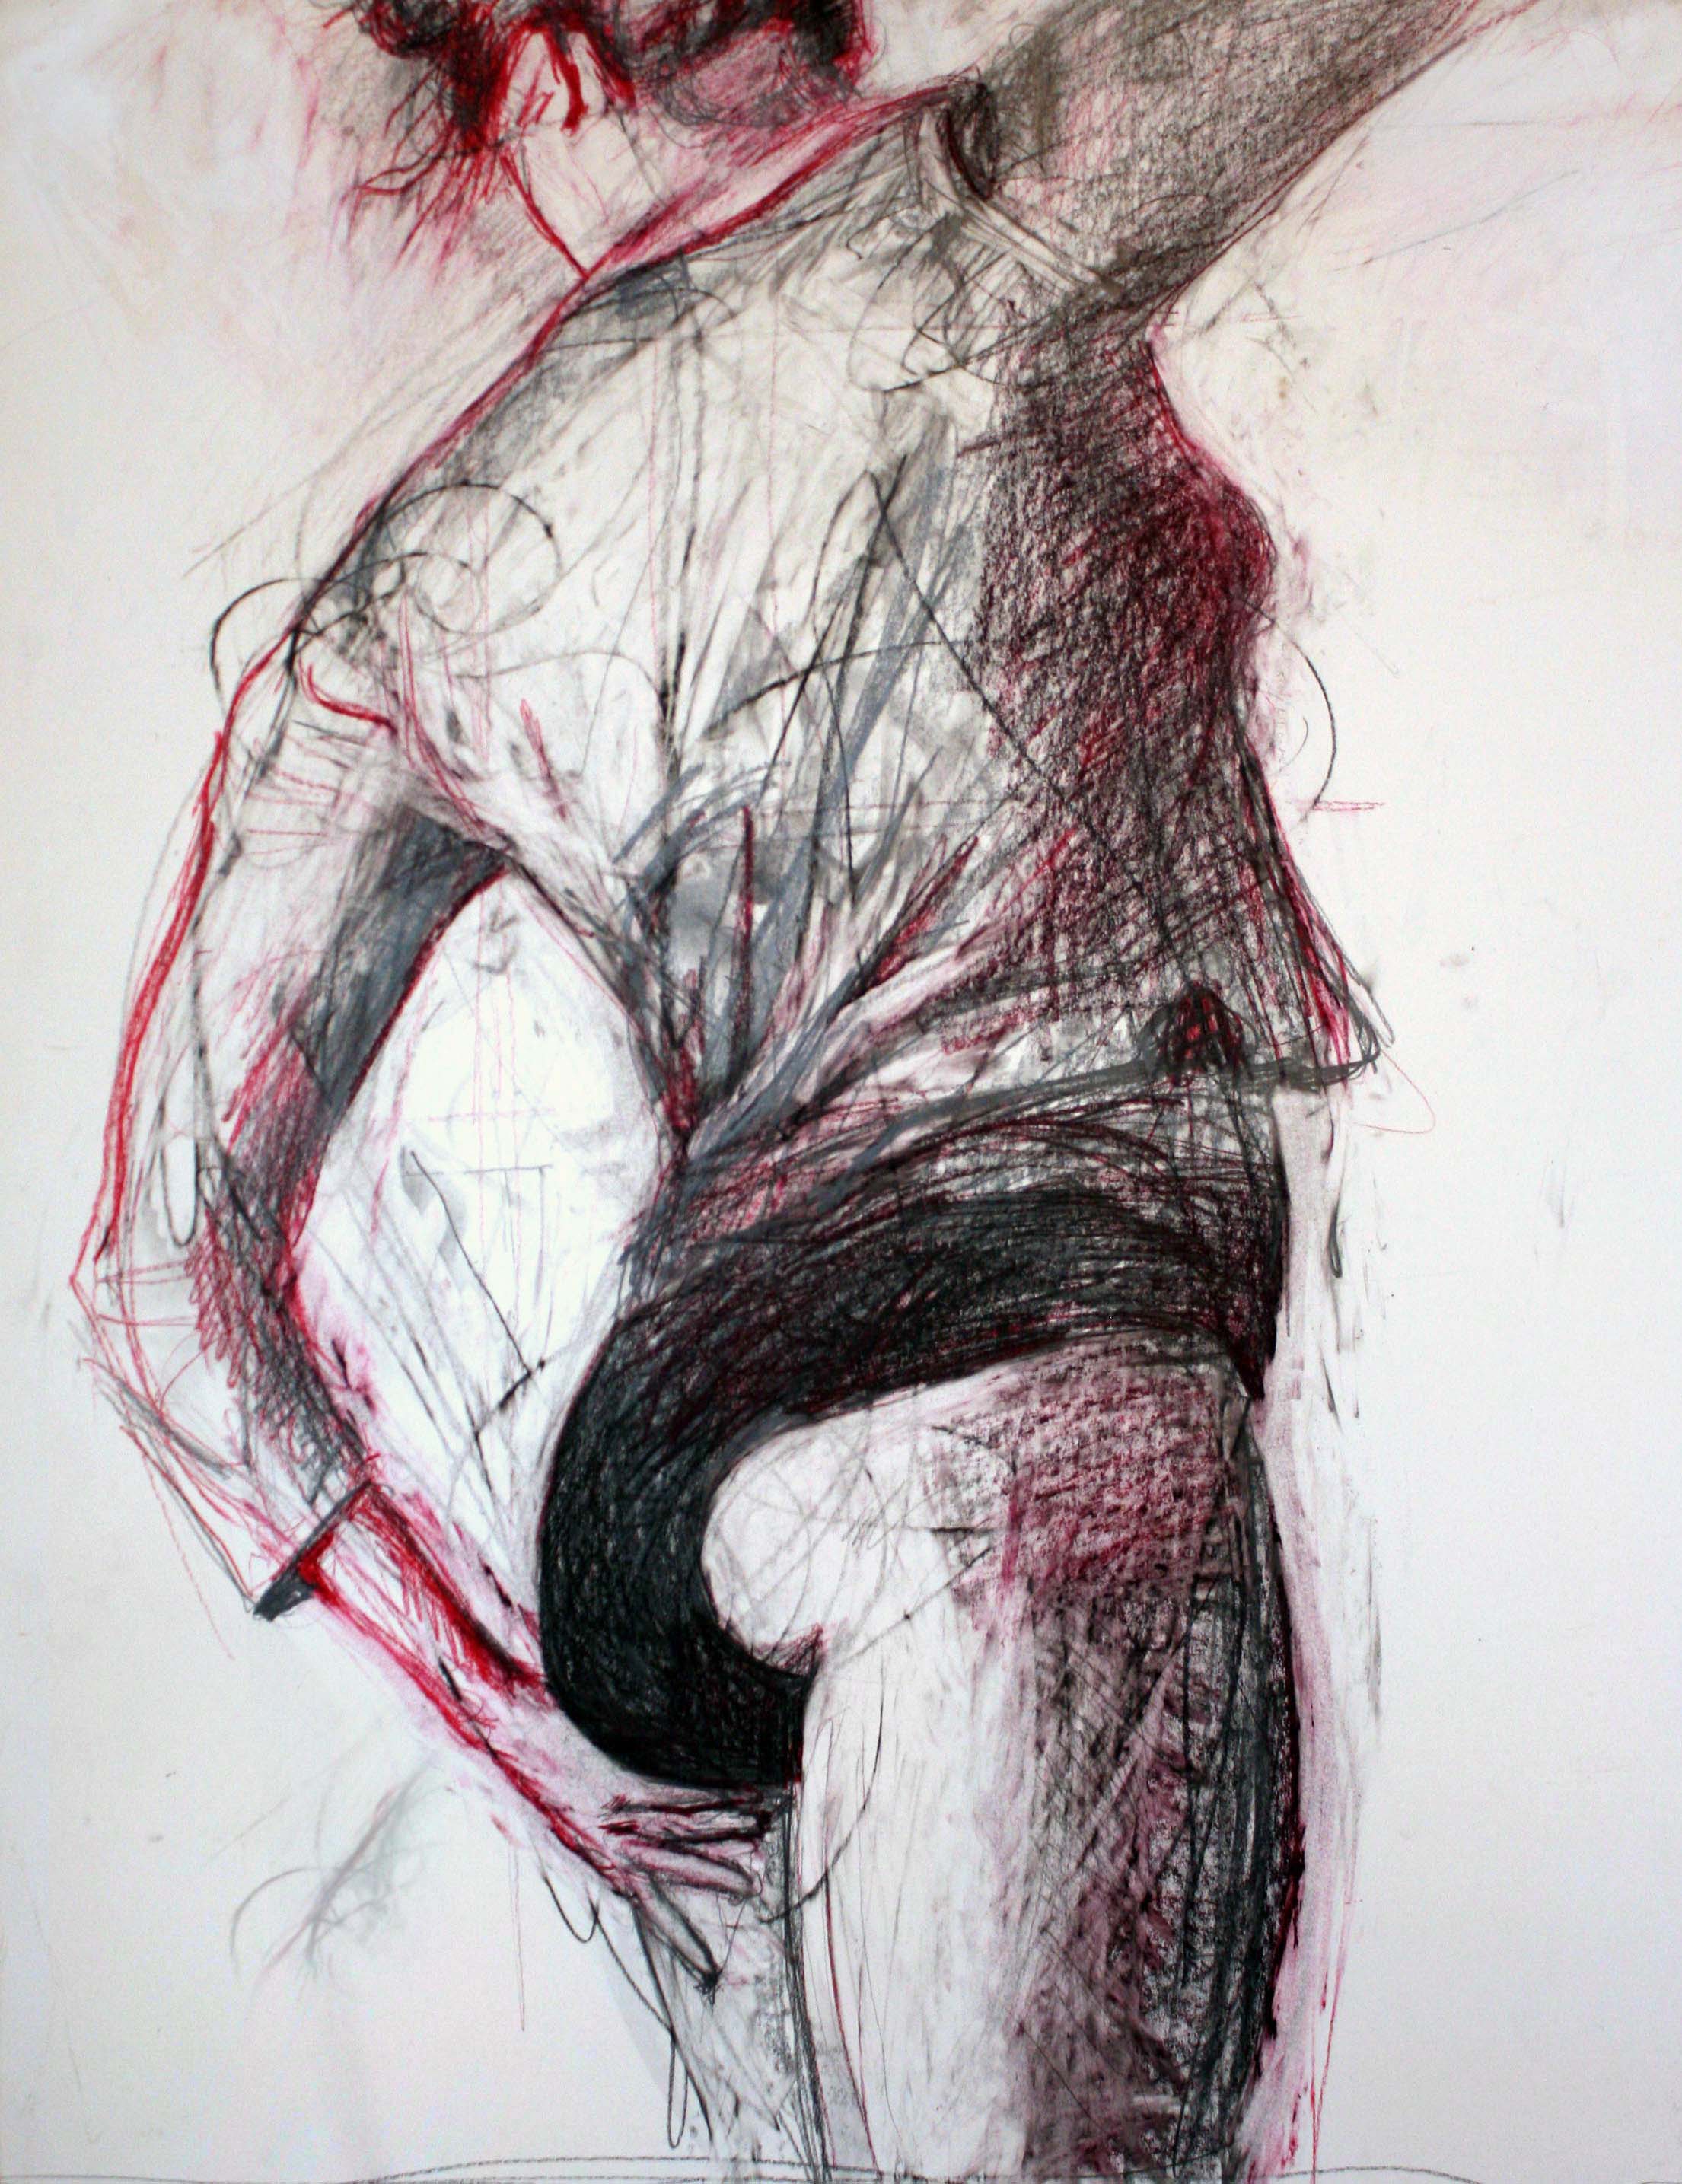   Twist , 2013. Graphite and wax crayon on cardboard, 40 x 30" 